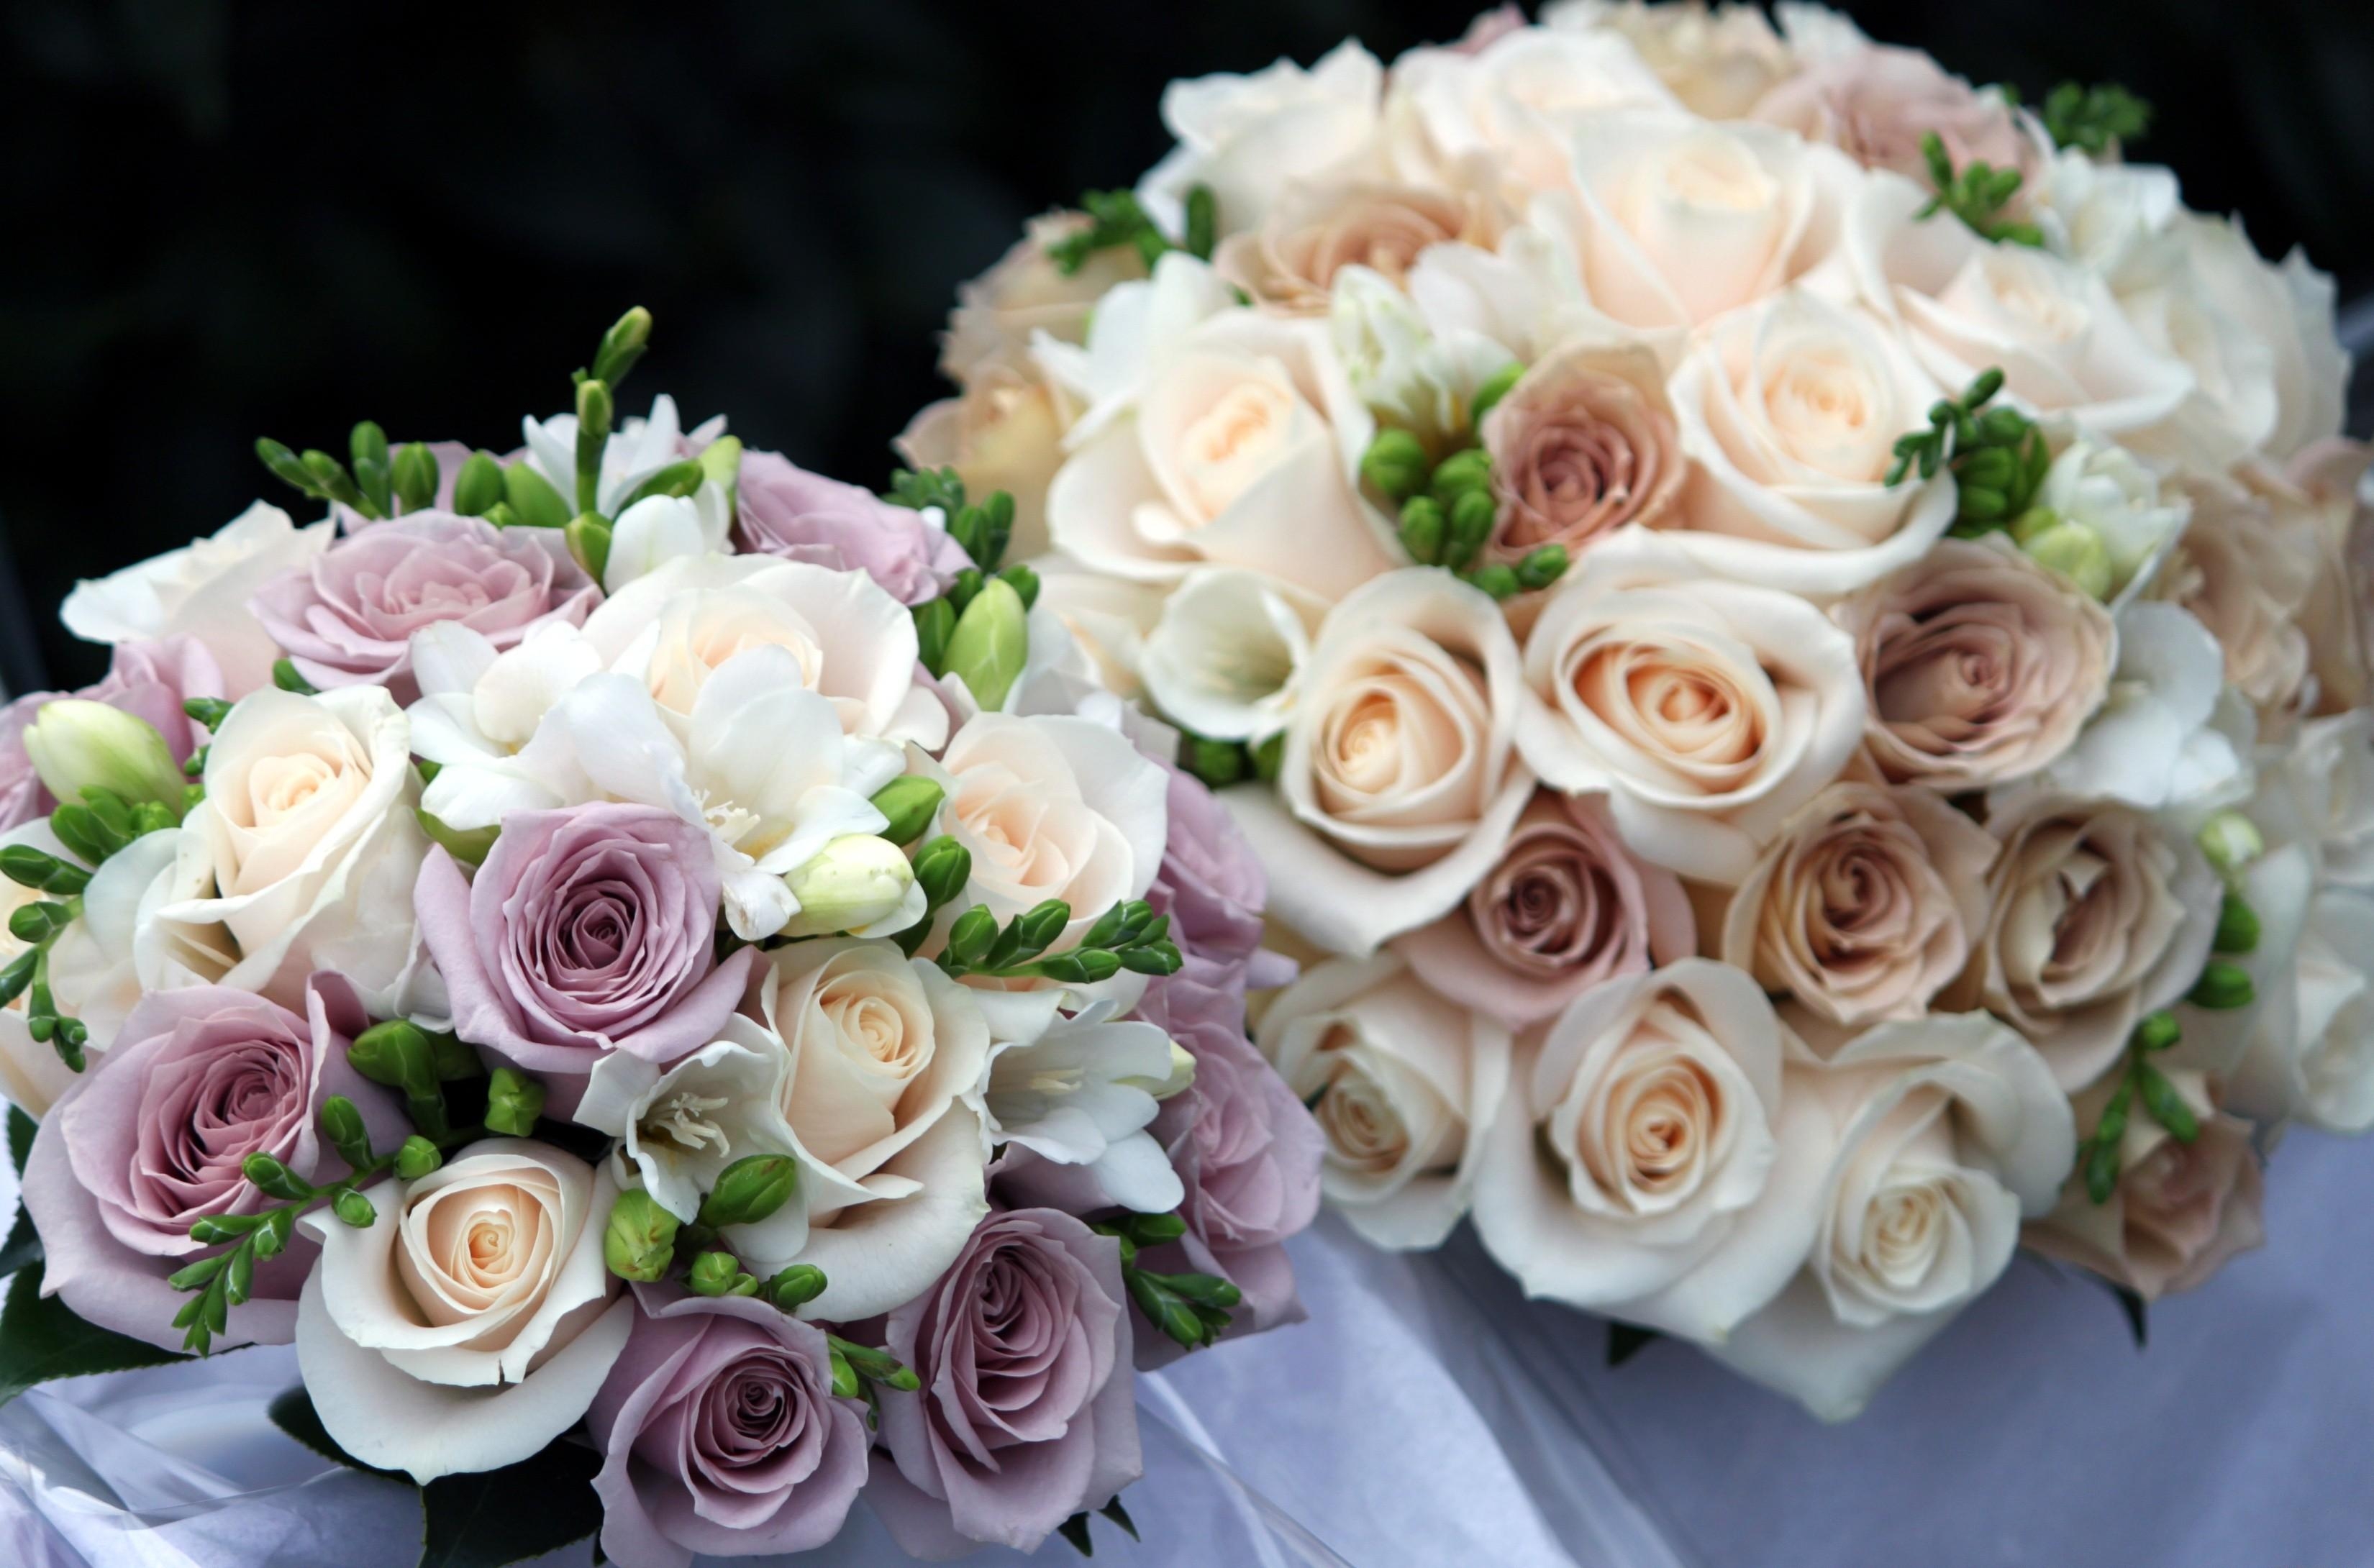 roses, flowers, wedding bouquets Wallpaper, HD Flowers 4K Wallpapers